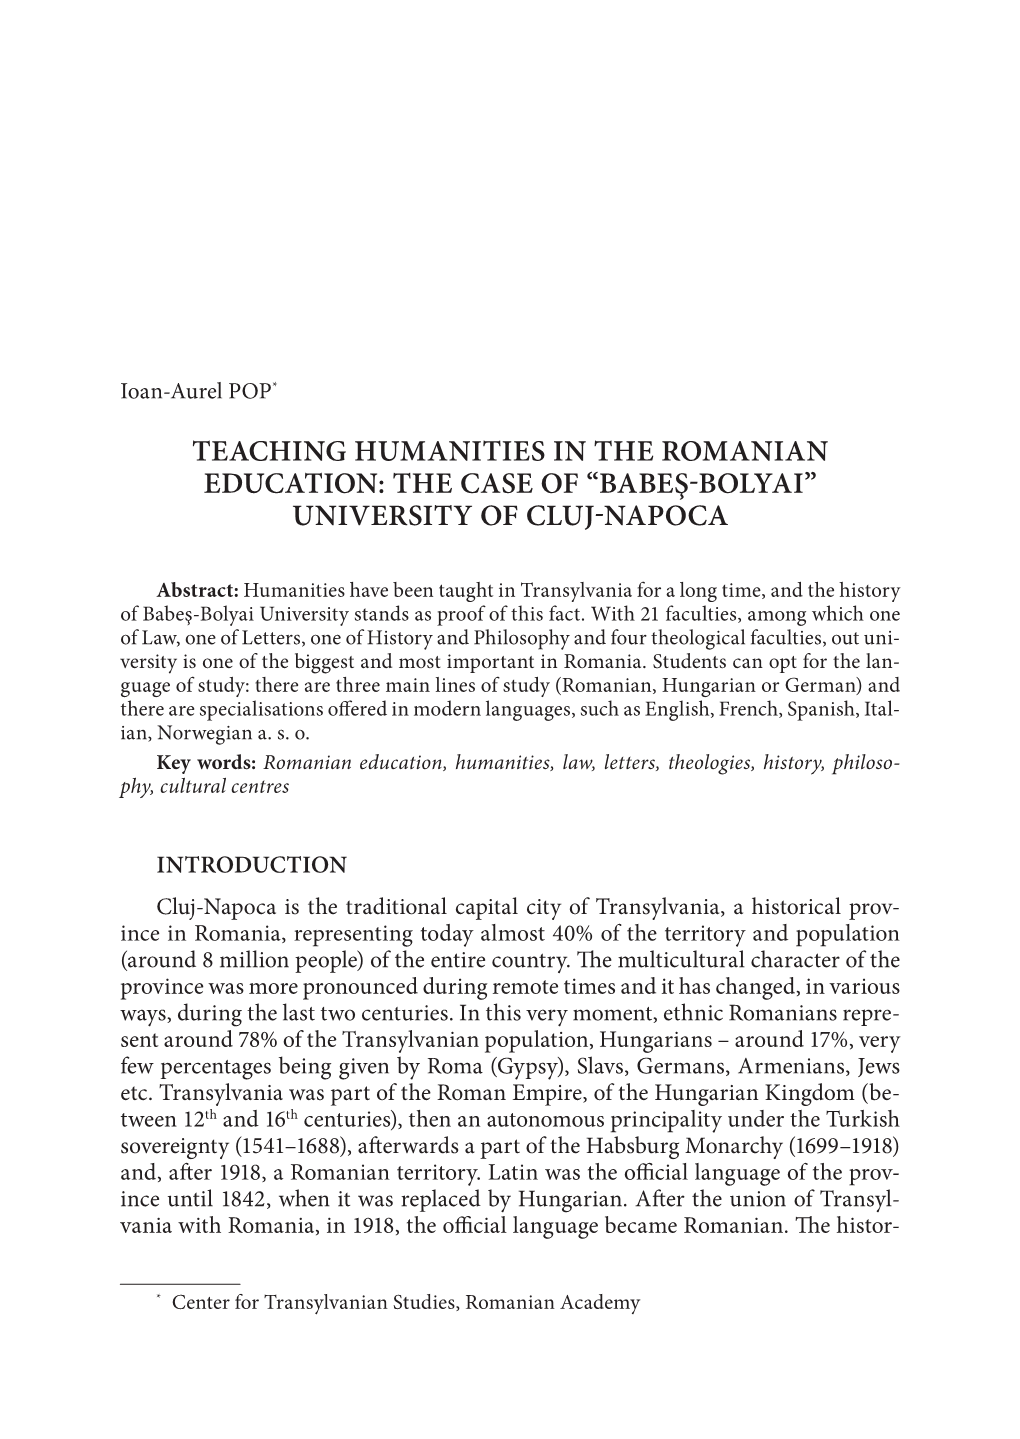 Teaching Humanities in the Romanian Education: the Case of “Babeş-Bolyai” University of Cluj-Napoca